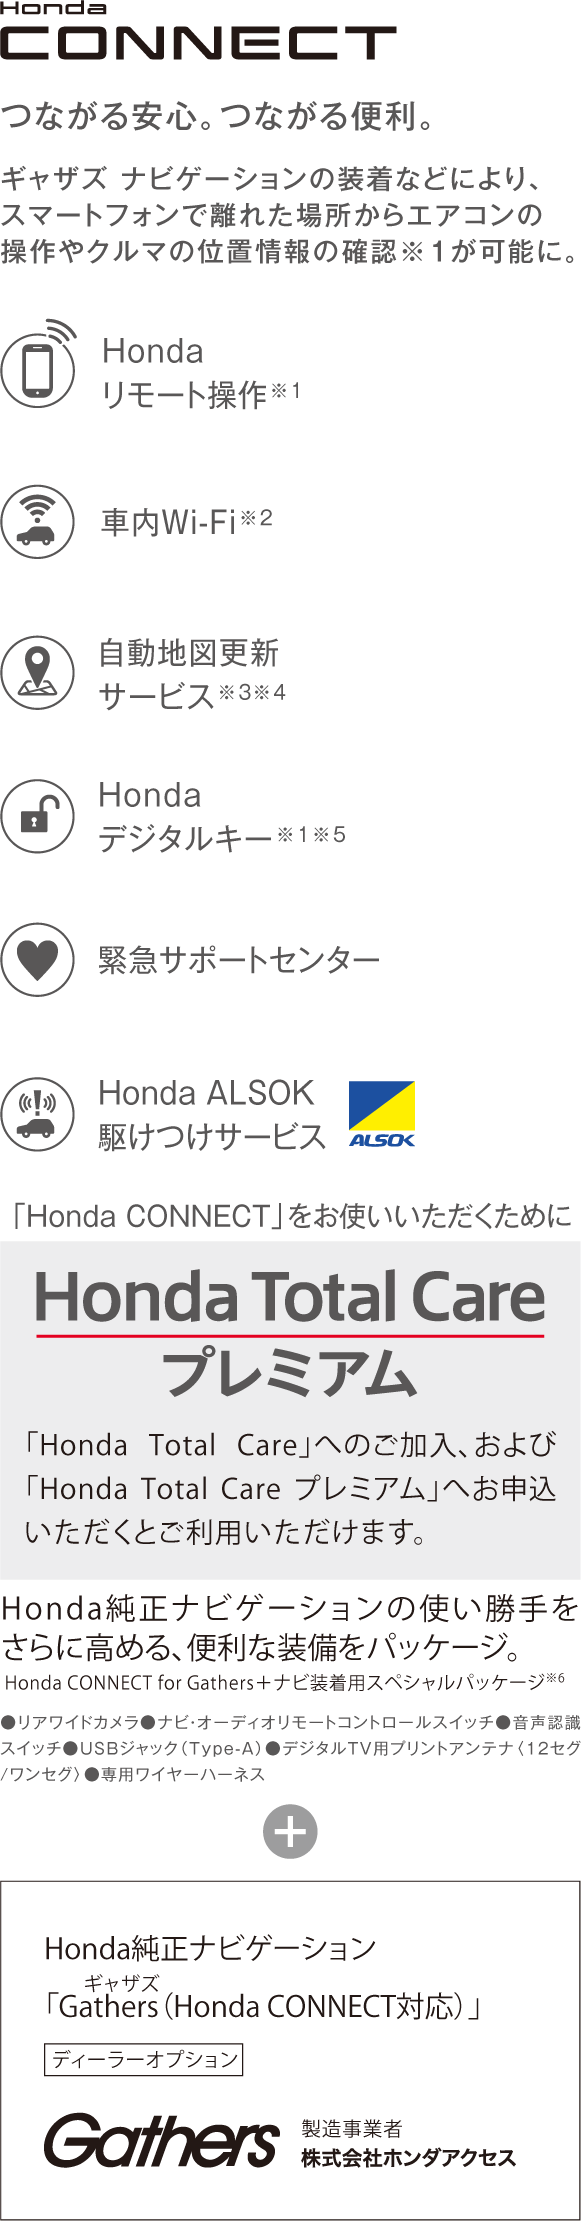 Honda CONNECT 新世代コネクテッド技術搭載。